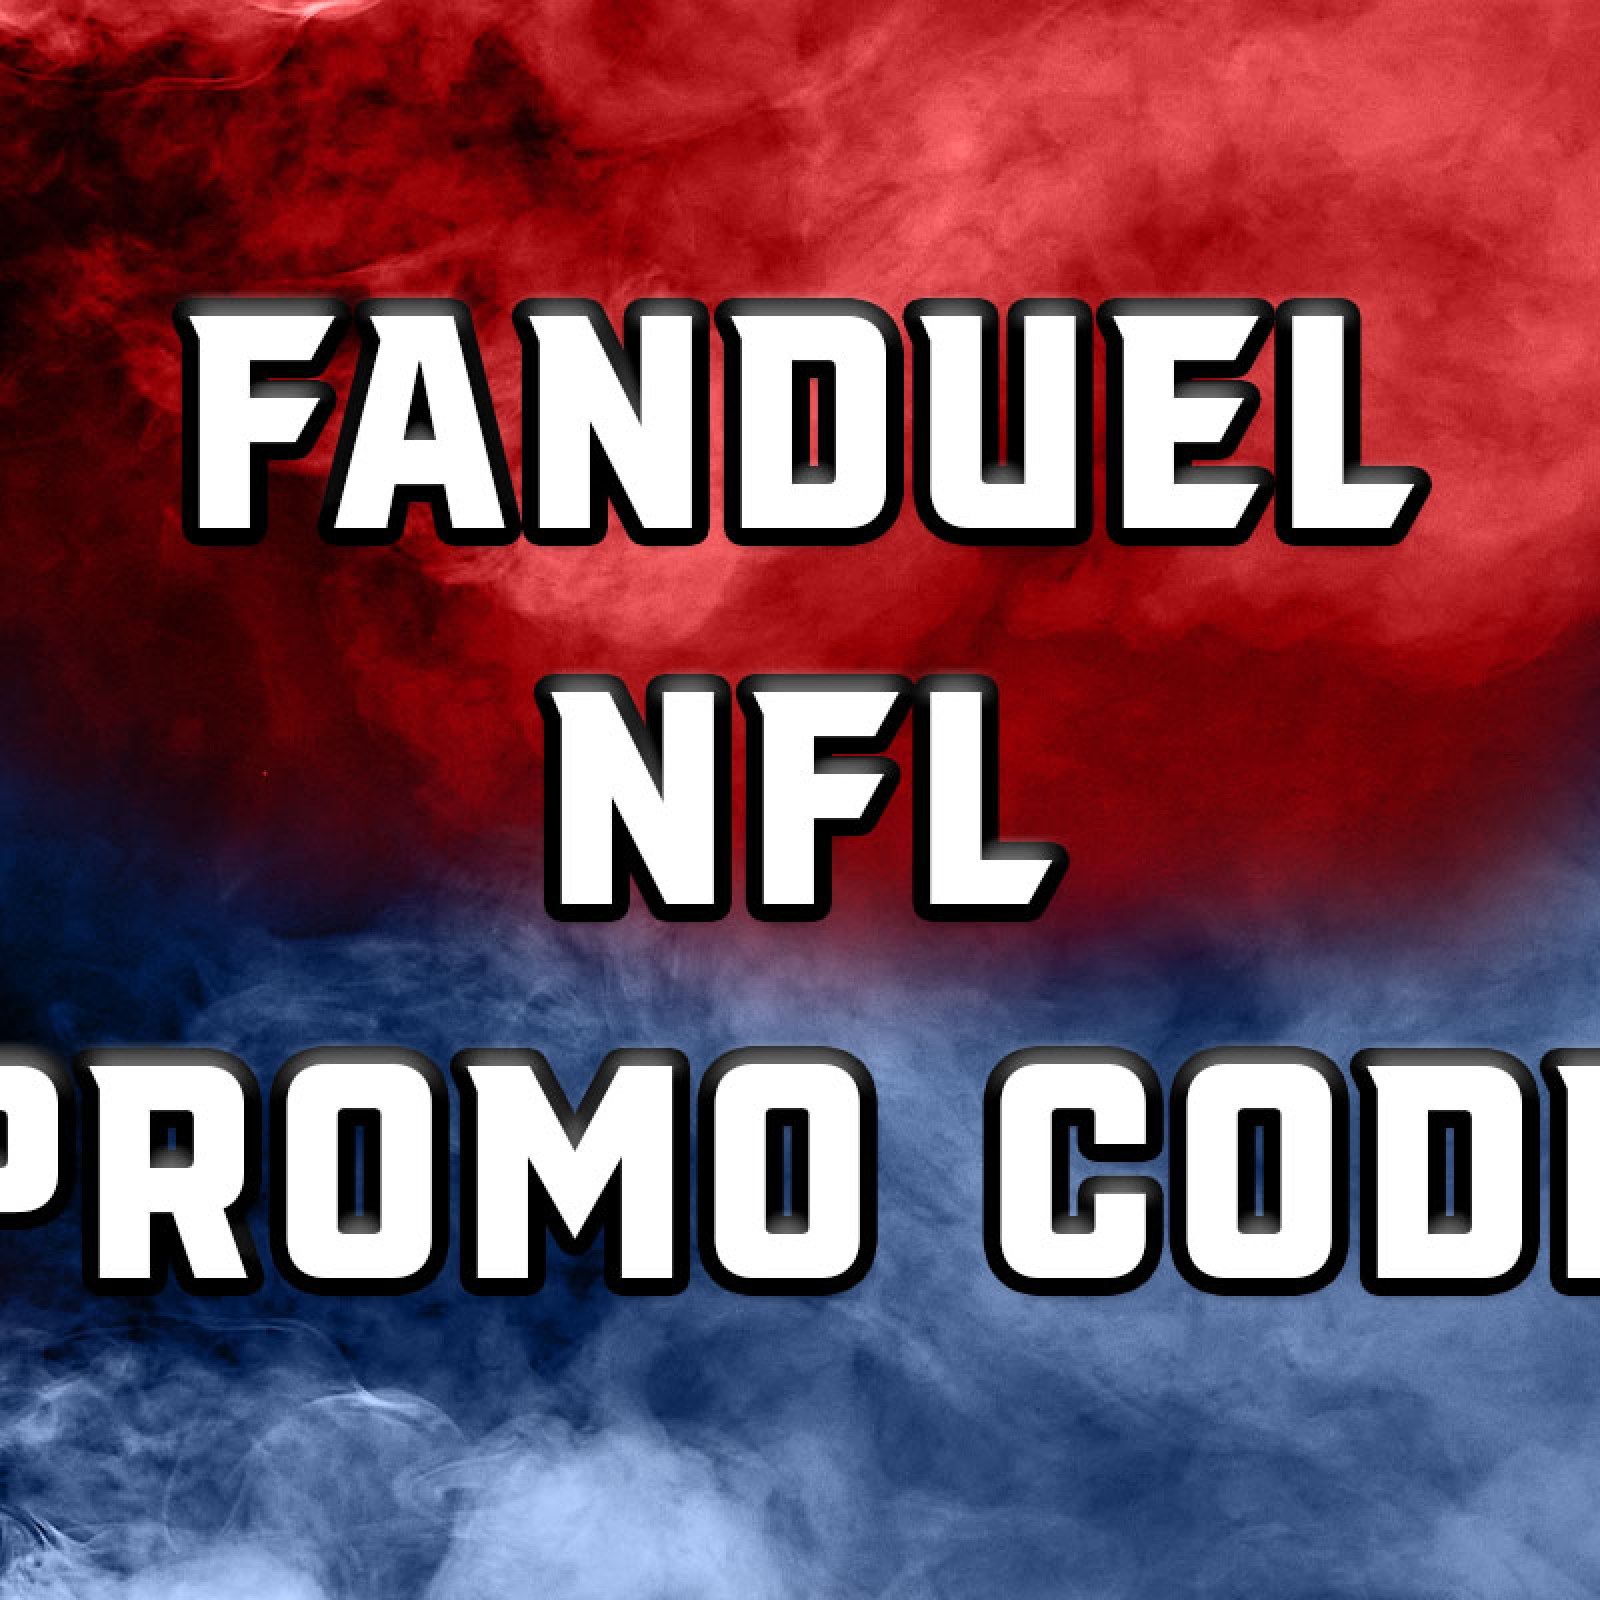 FanDuel Promo Code for NFL Week 2: $100 Off NFL Sunday Ticket, $200 Bonus